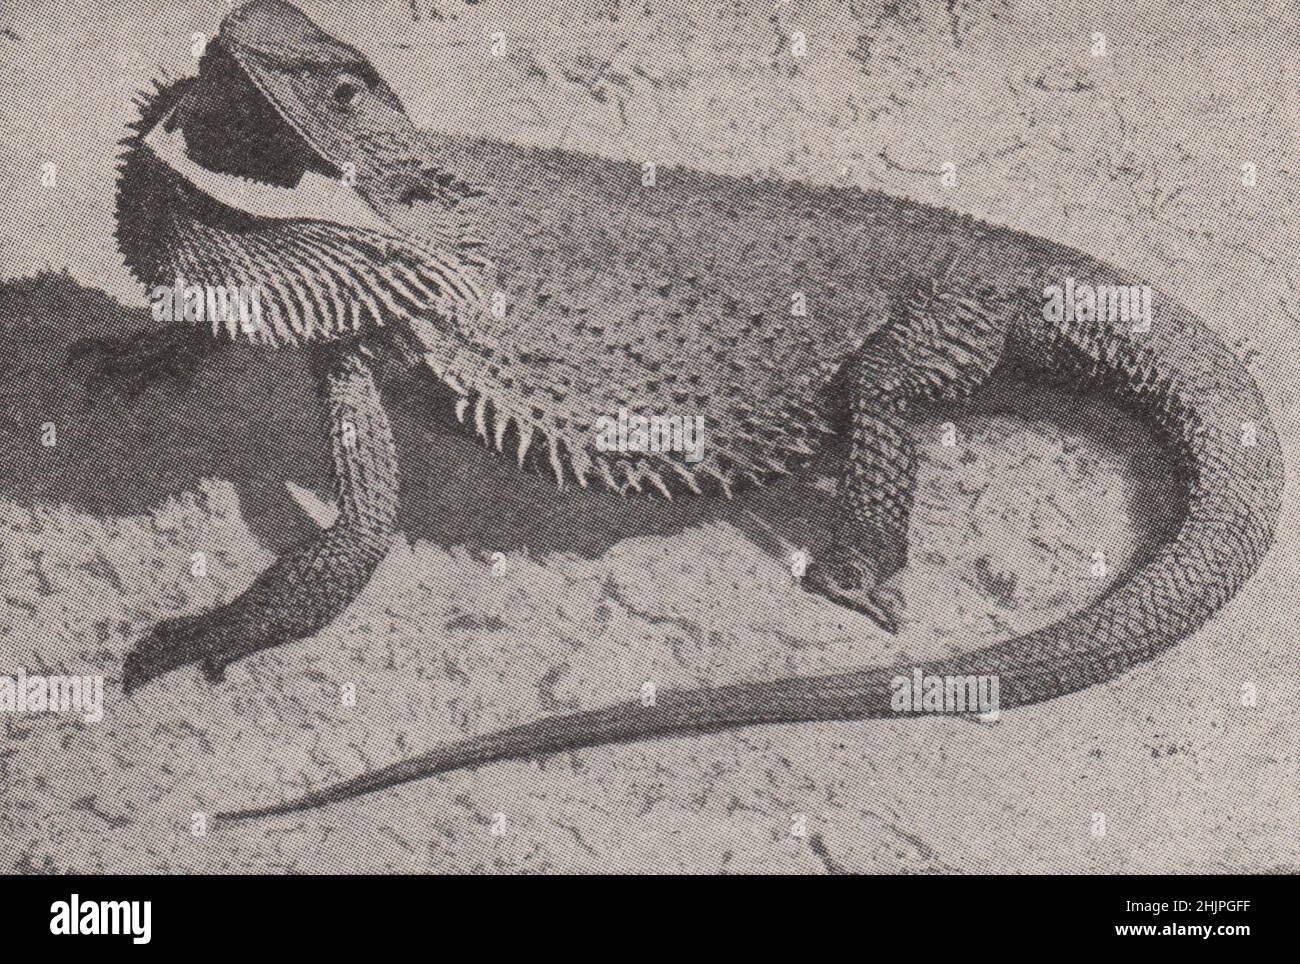 Reptilienfreak der Antipoden. Australien (1923) Stockfoto